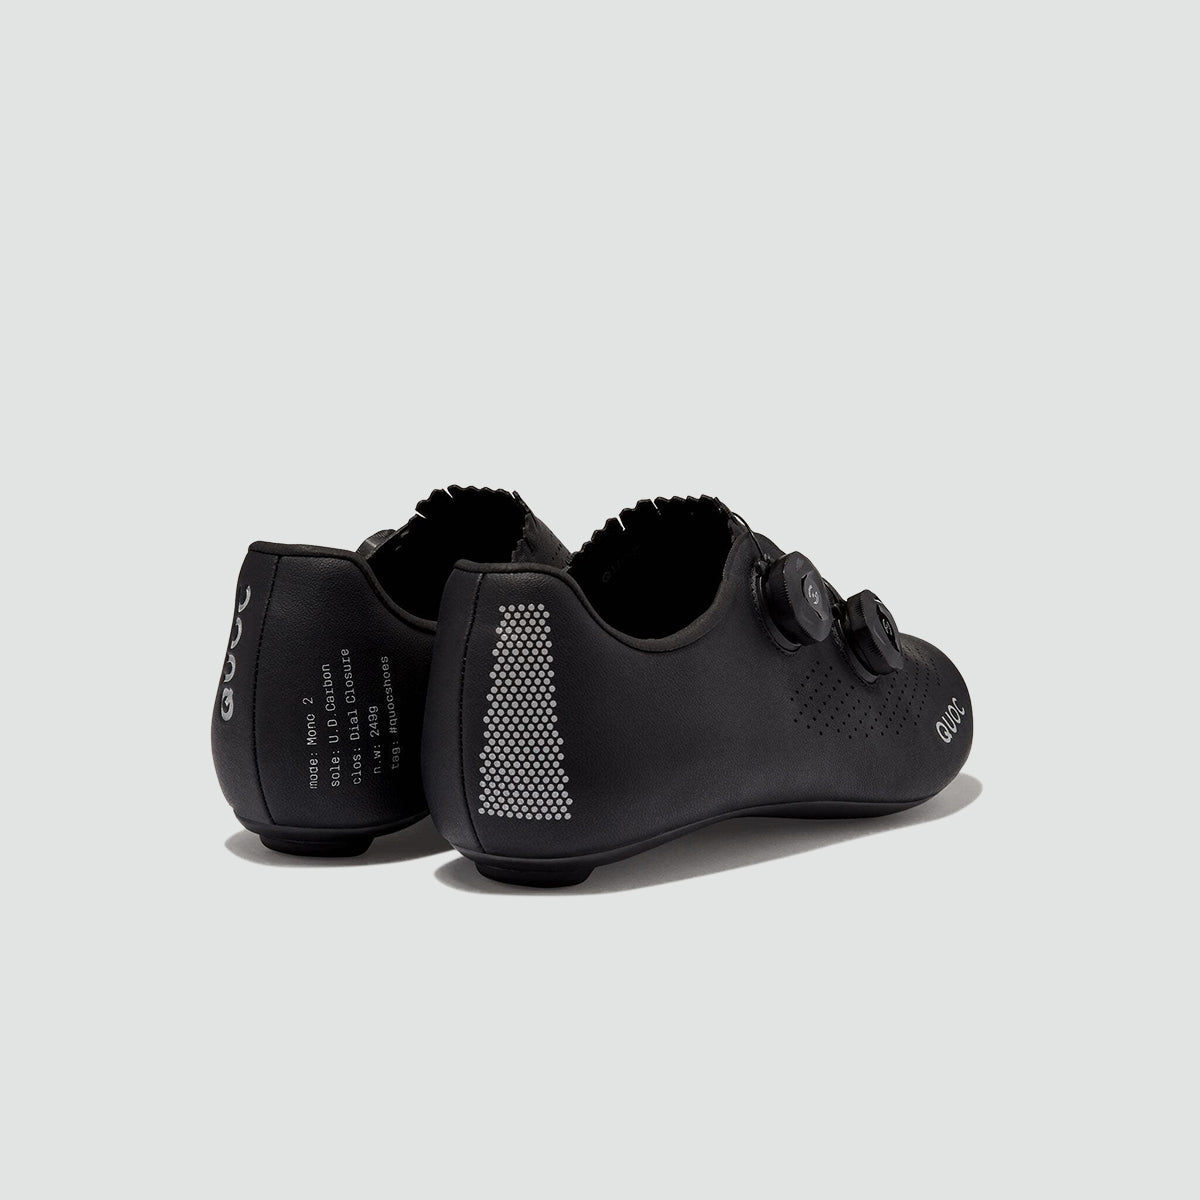 Mono II Shoes - Black